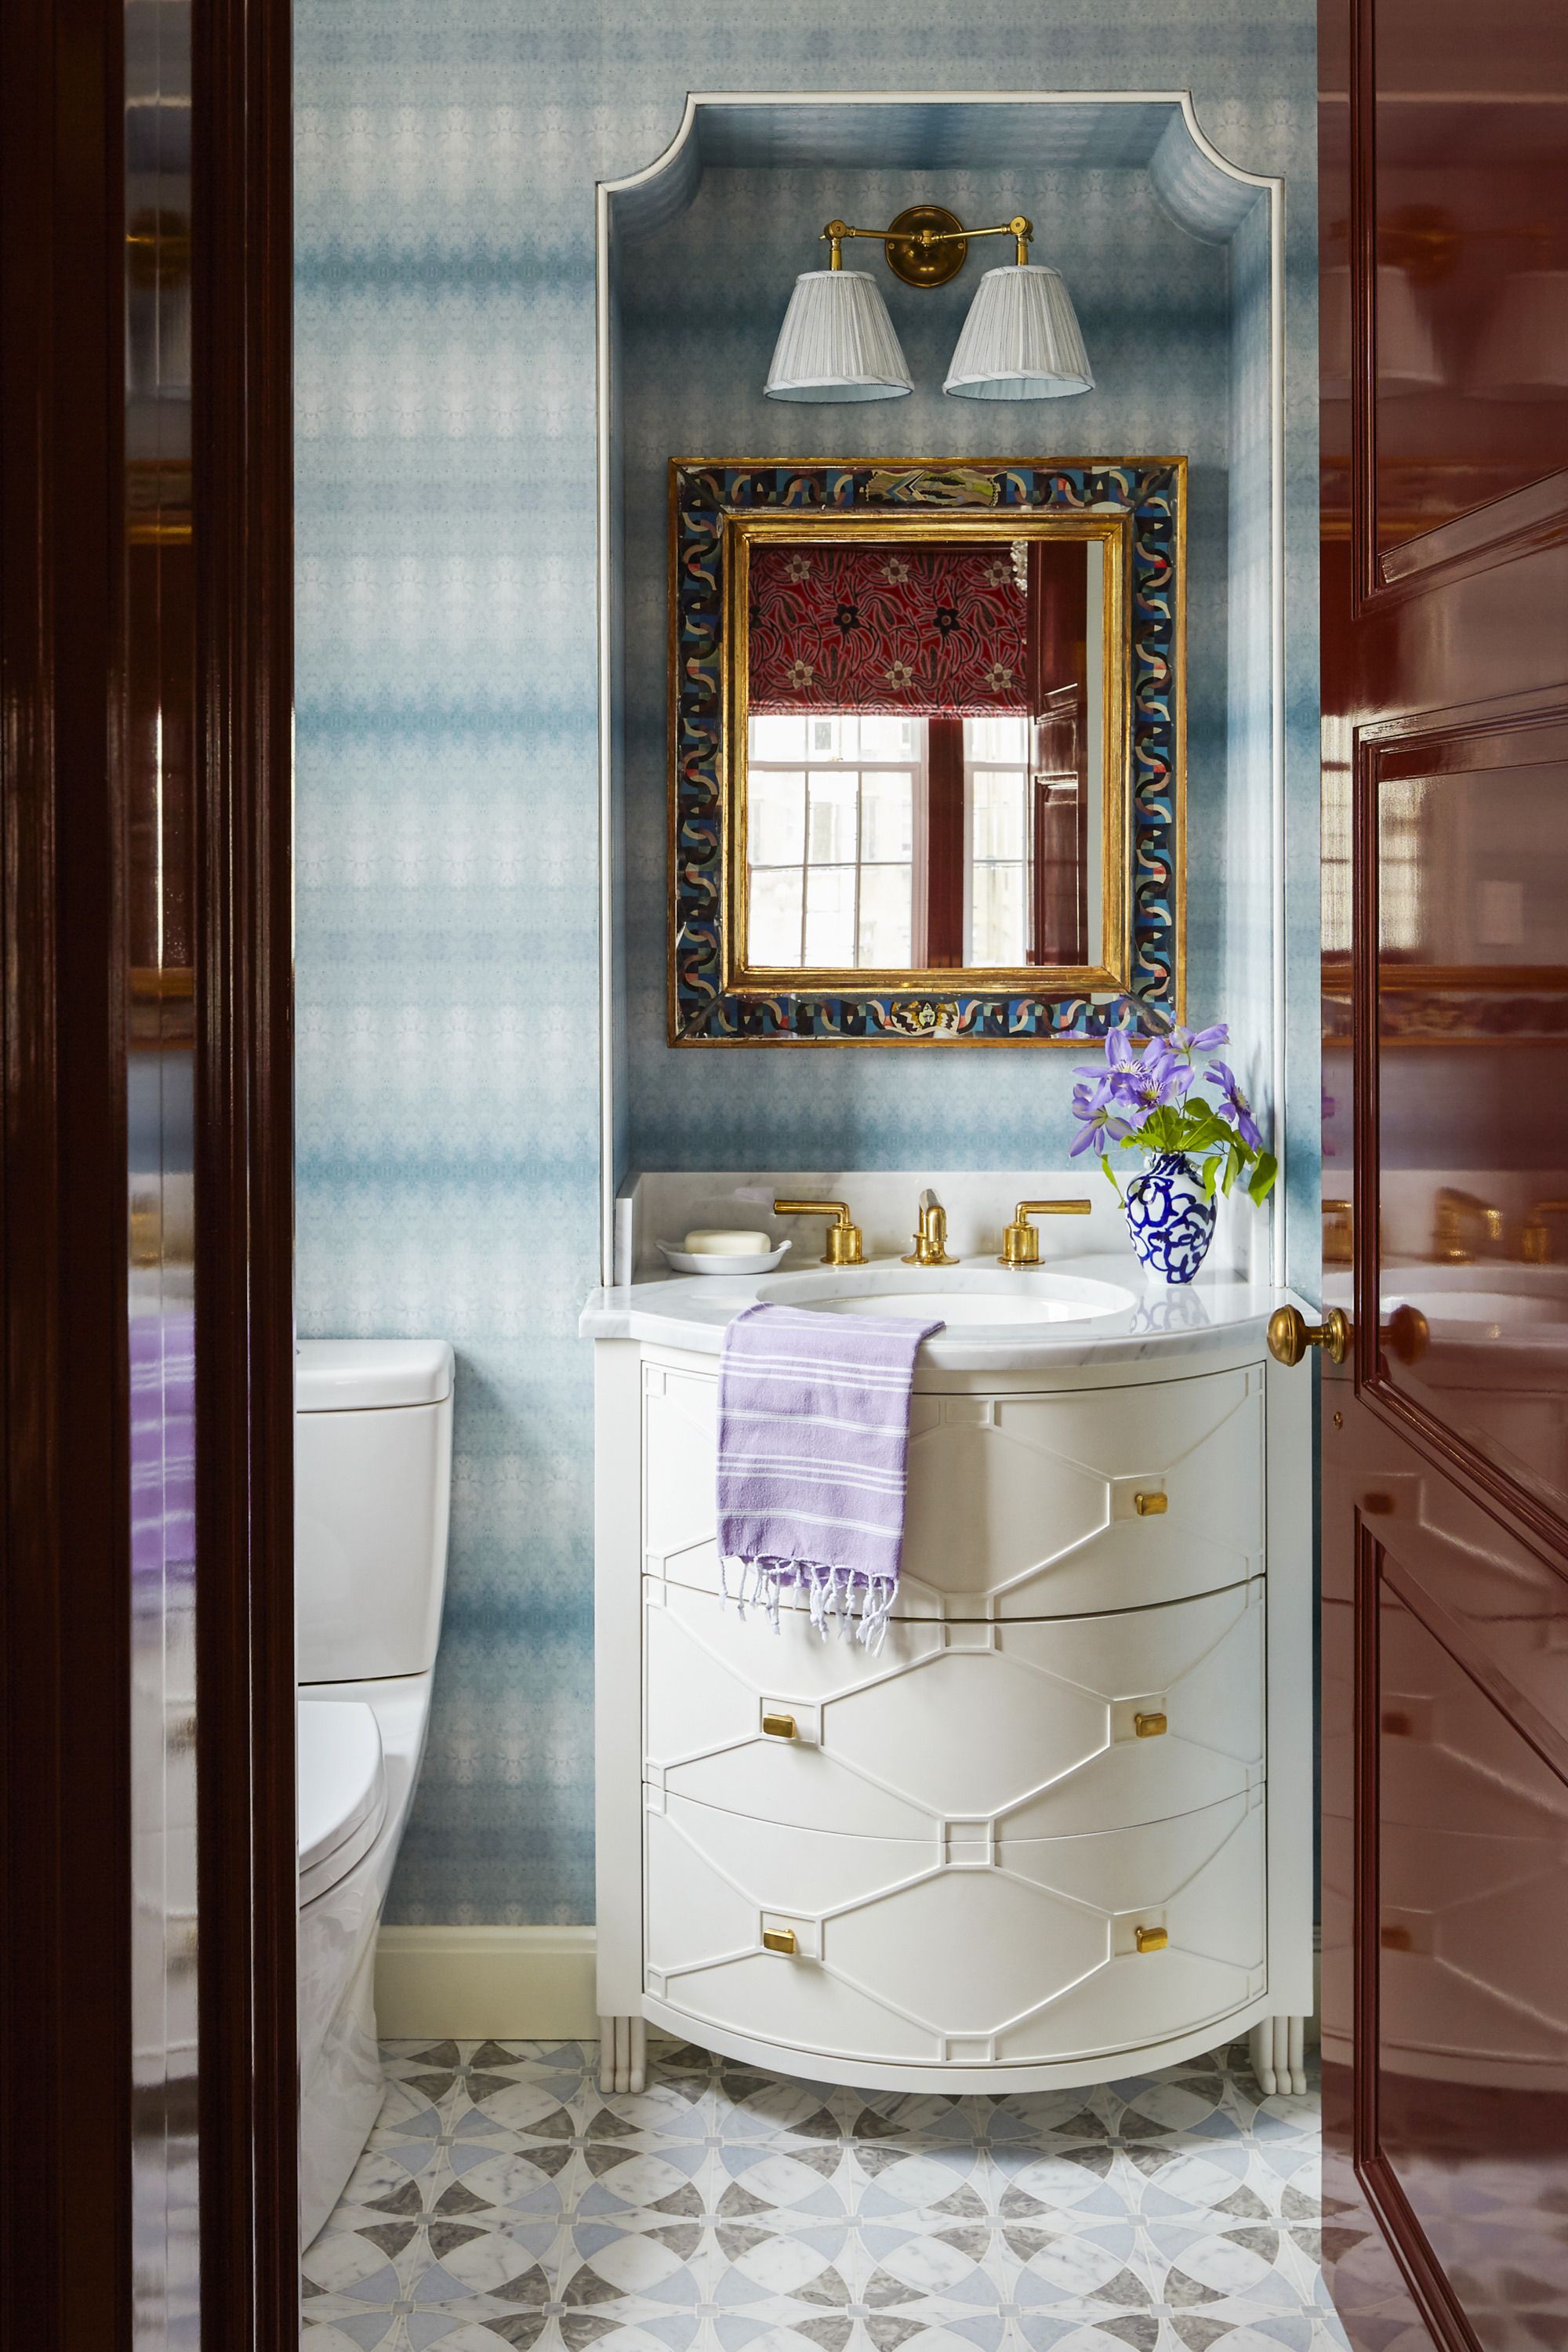 Bathroom vanity ideas: 12 beautiful designs to uplift your space